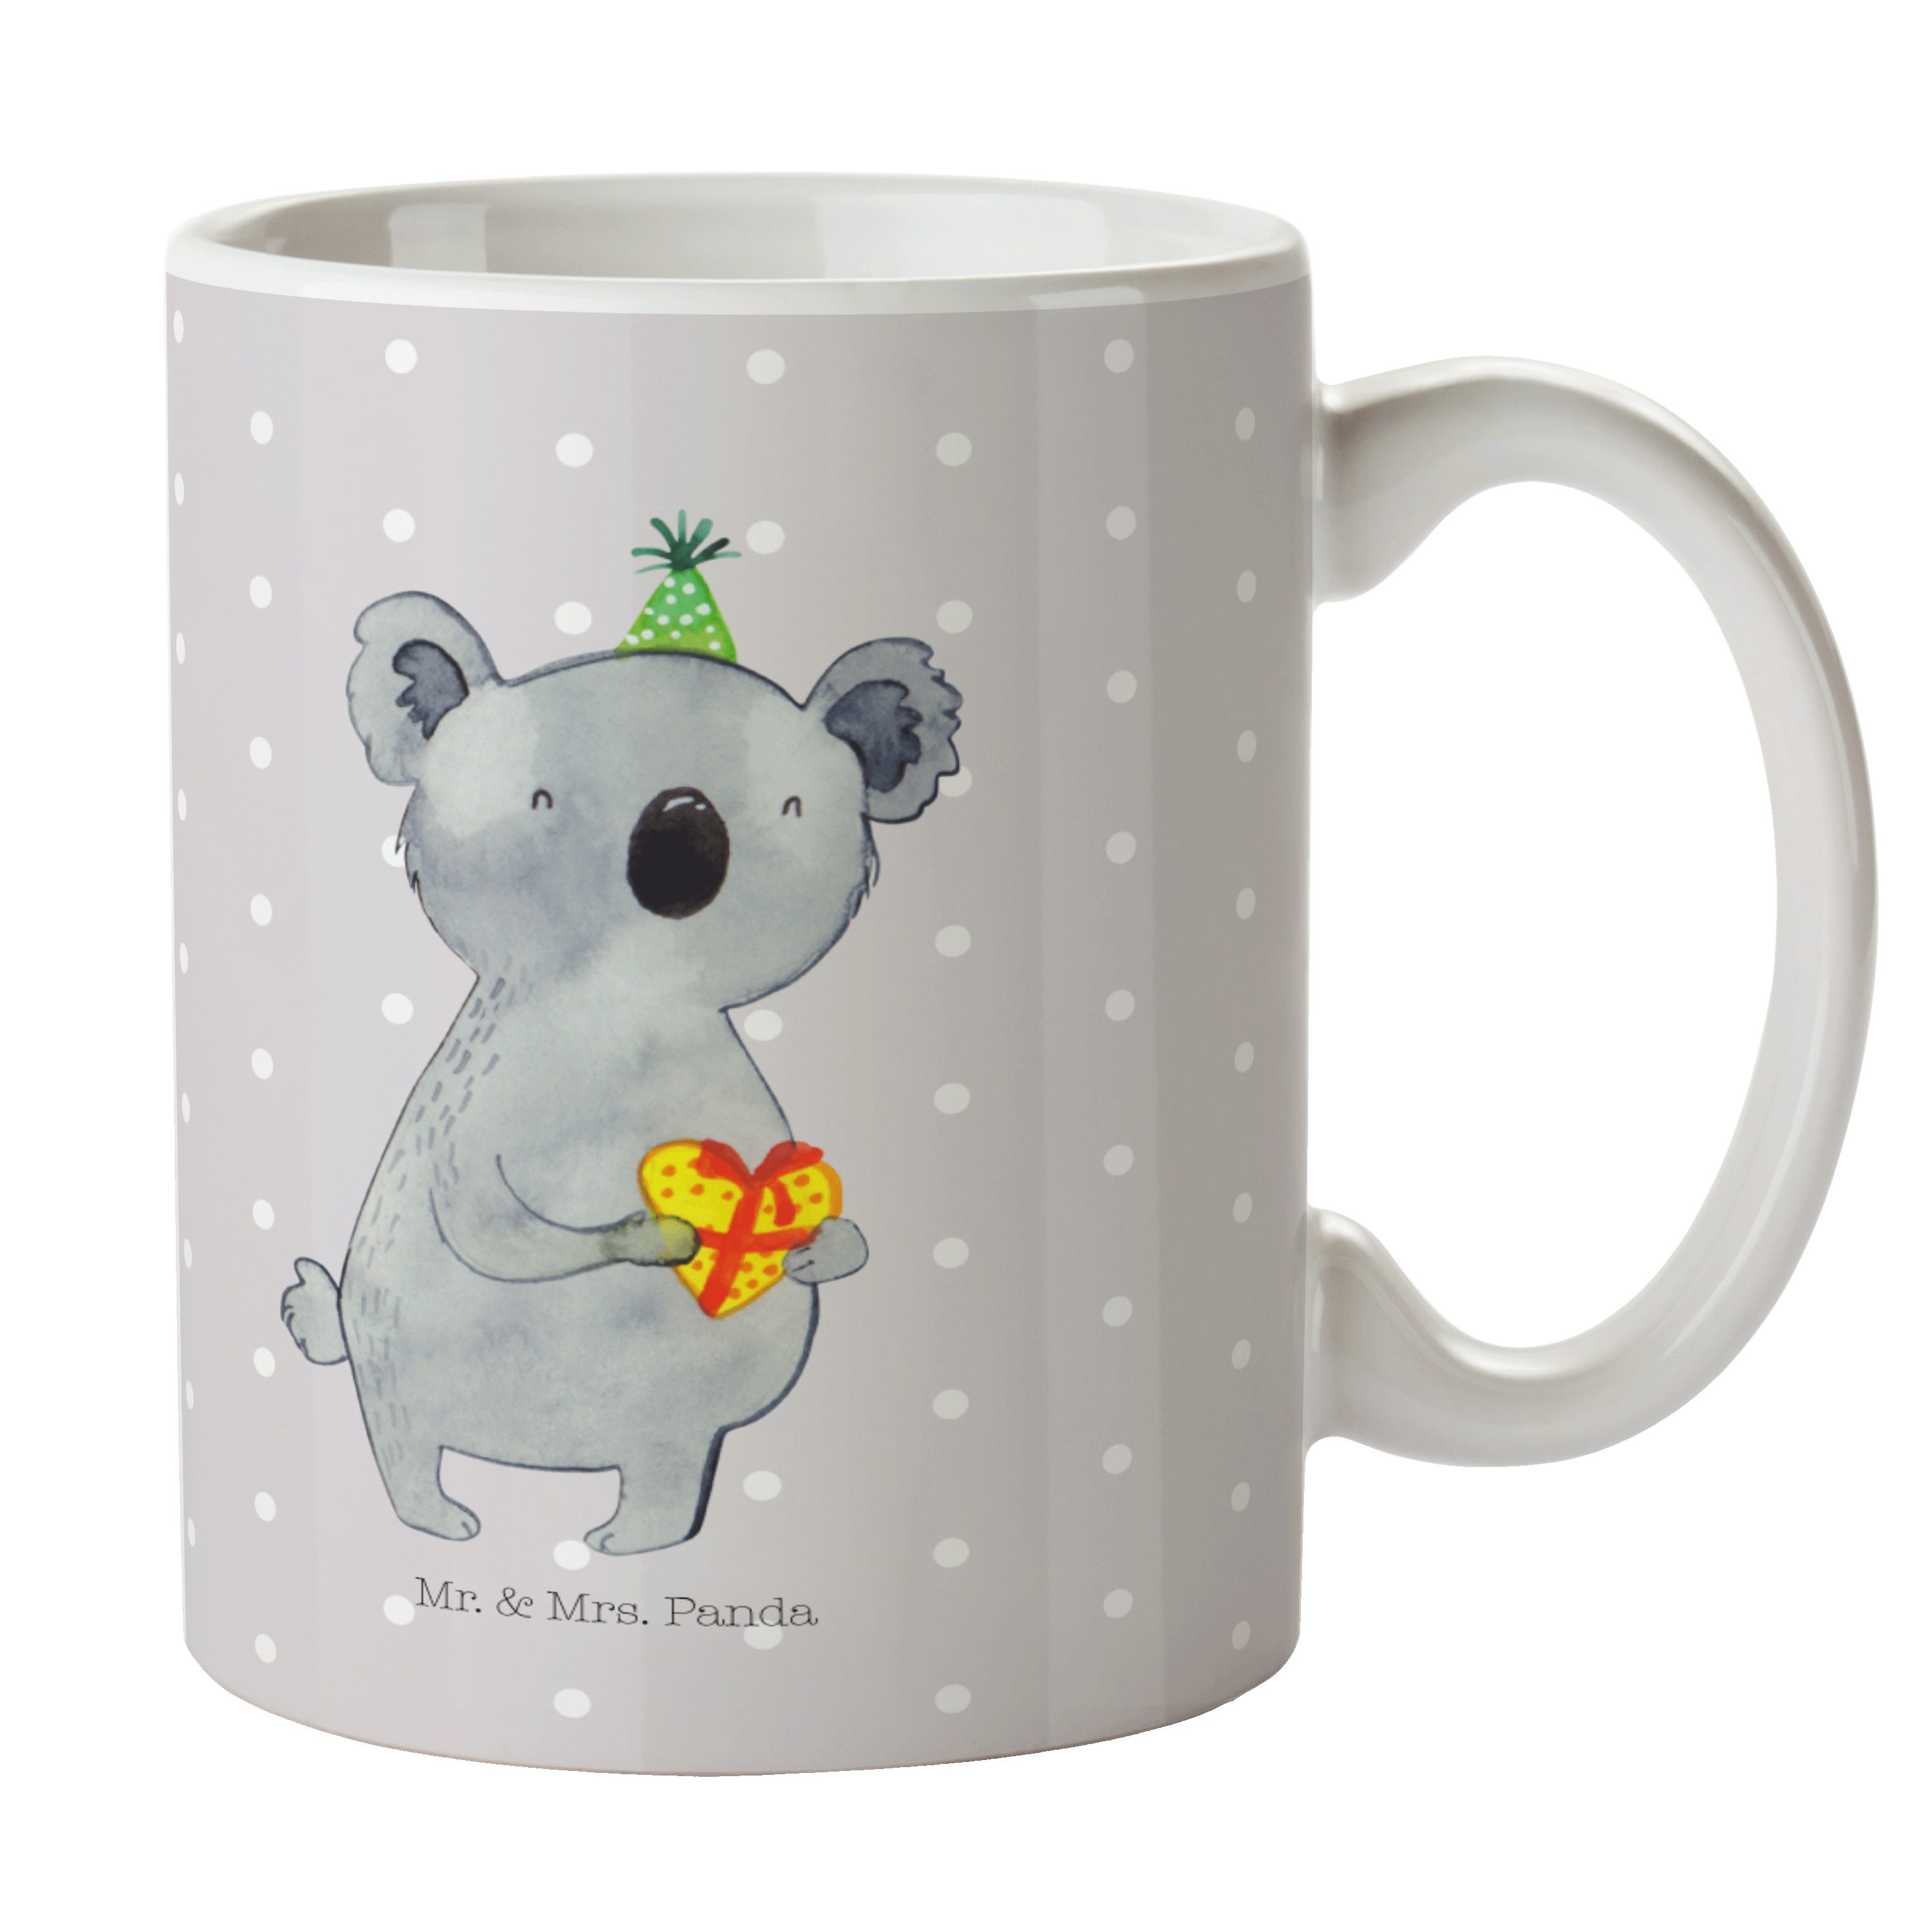 Mr. & Mrs. Panda Tasse Koala Geschenk - Grau Pastell - Kaffeebecher, Keramiktasse, Tasse, Bü, Keramik, Exklusive Motive